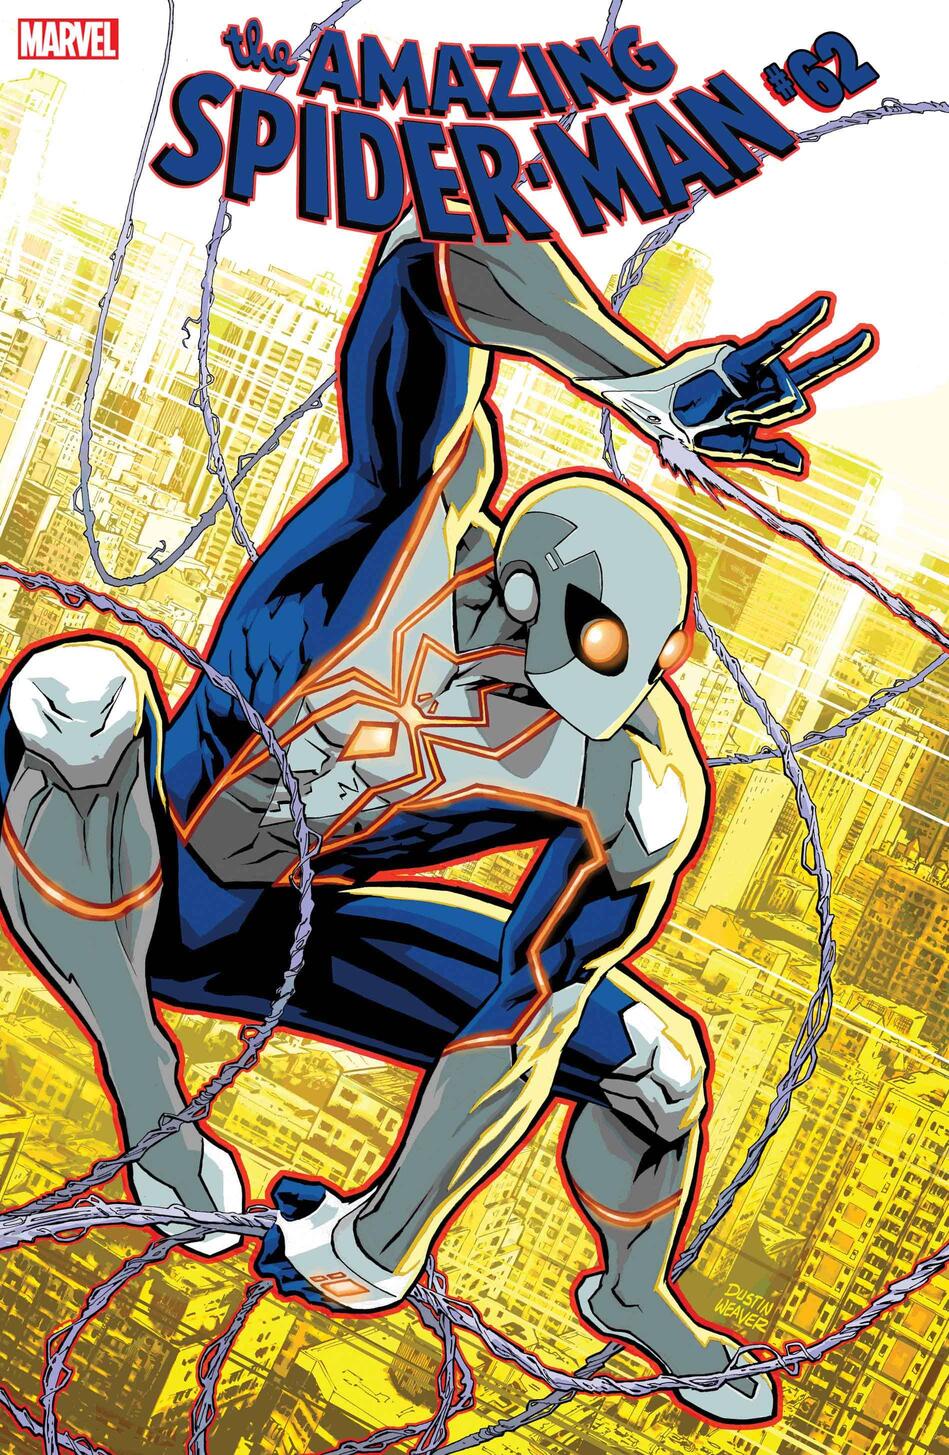 Spider-Man’s New Costume Revealed